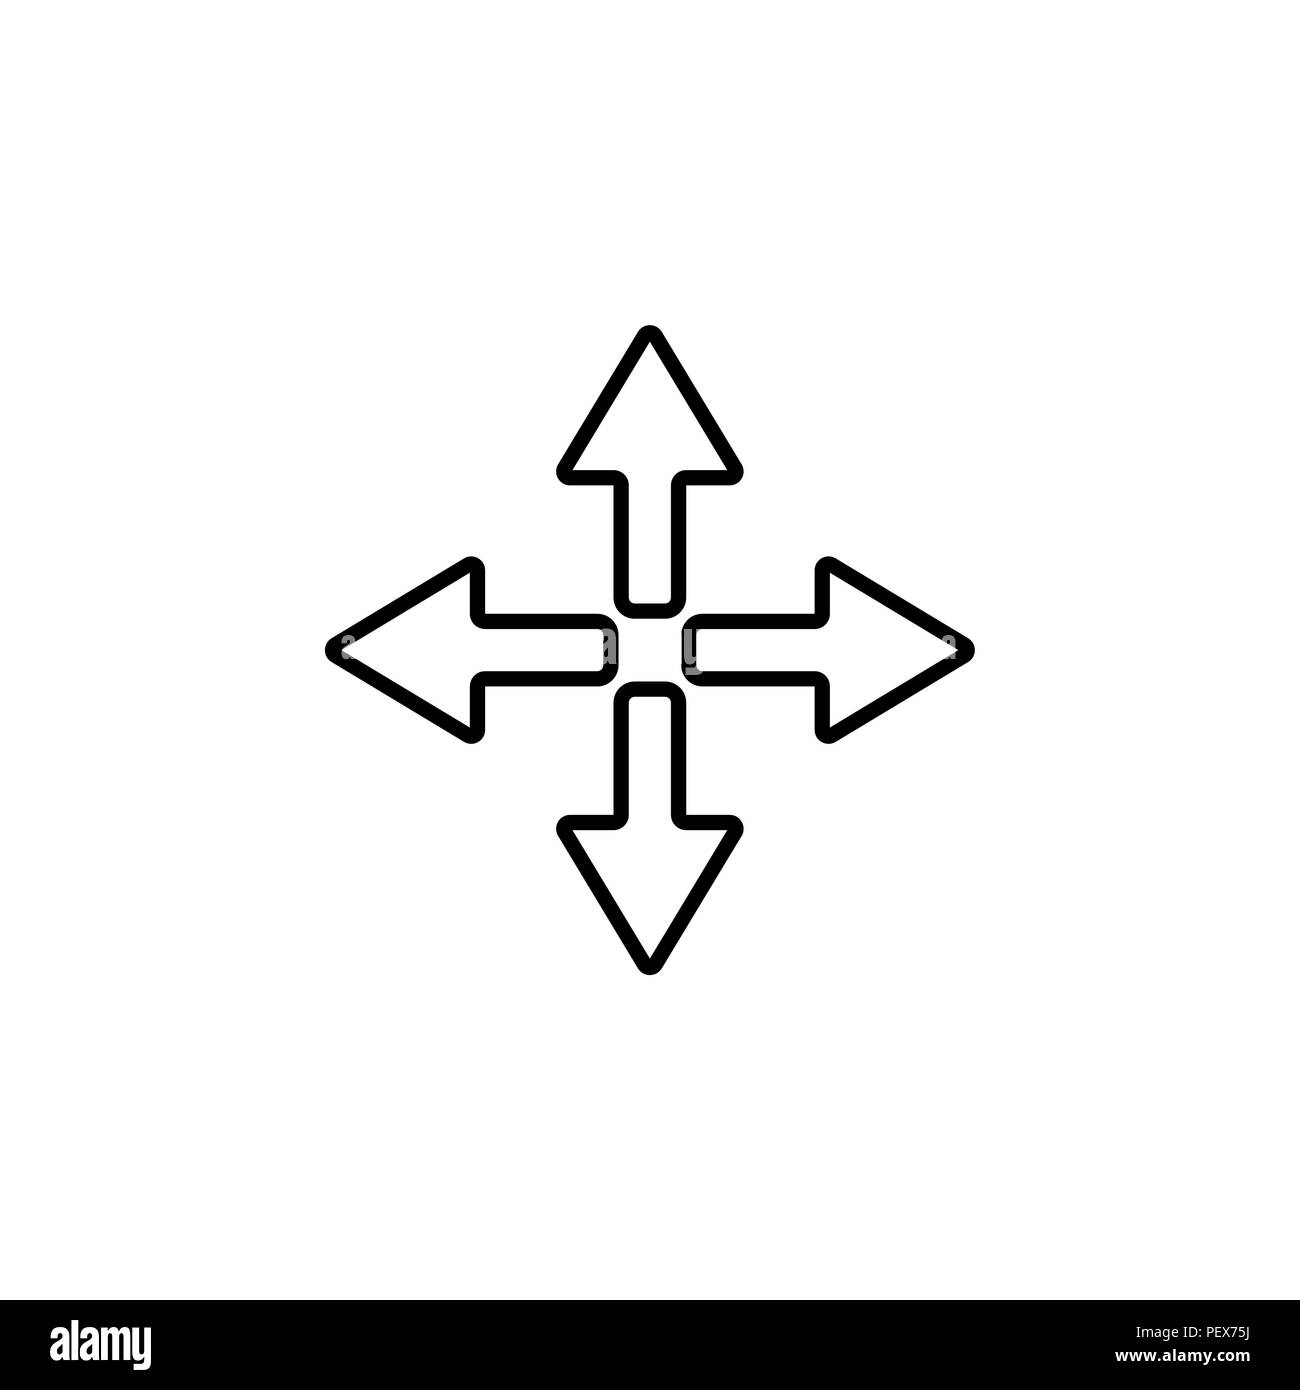 symbol arrows vector, line icon black on white background Stock Vector